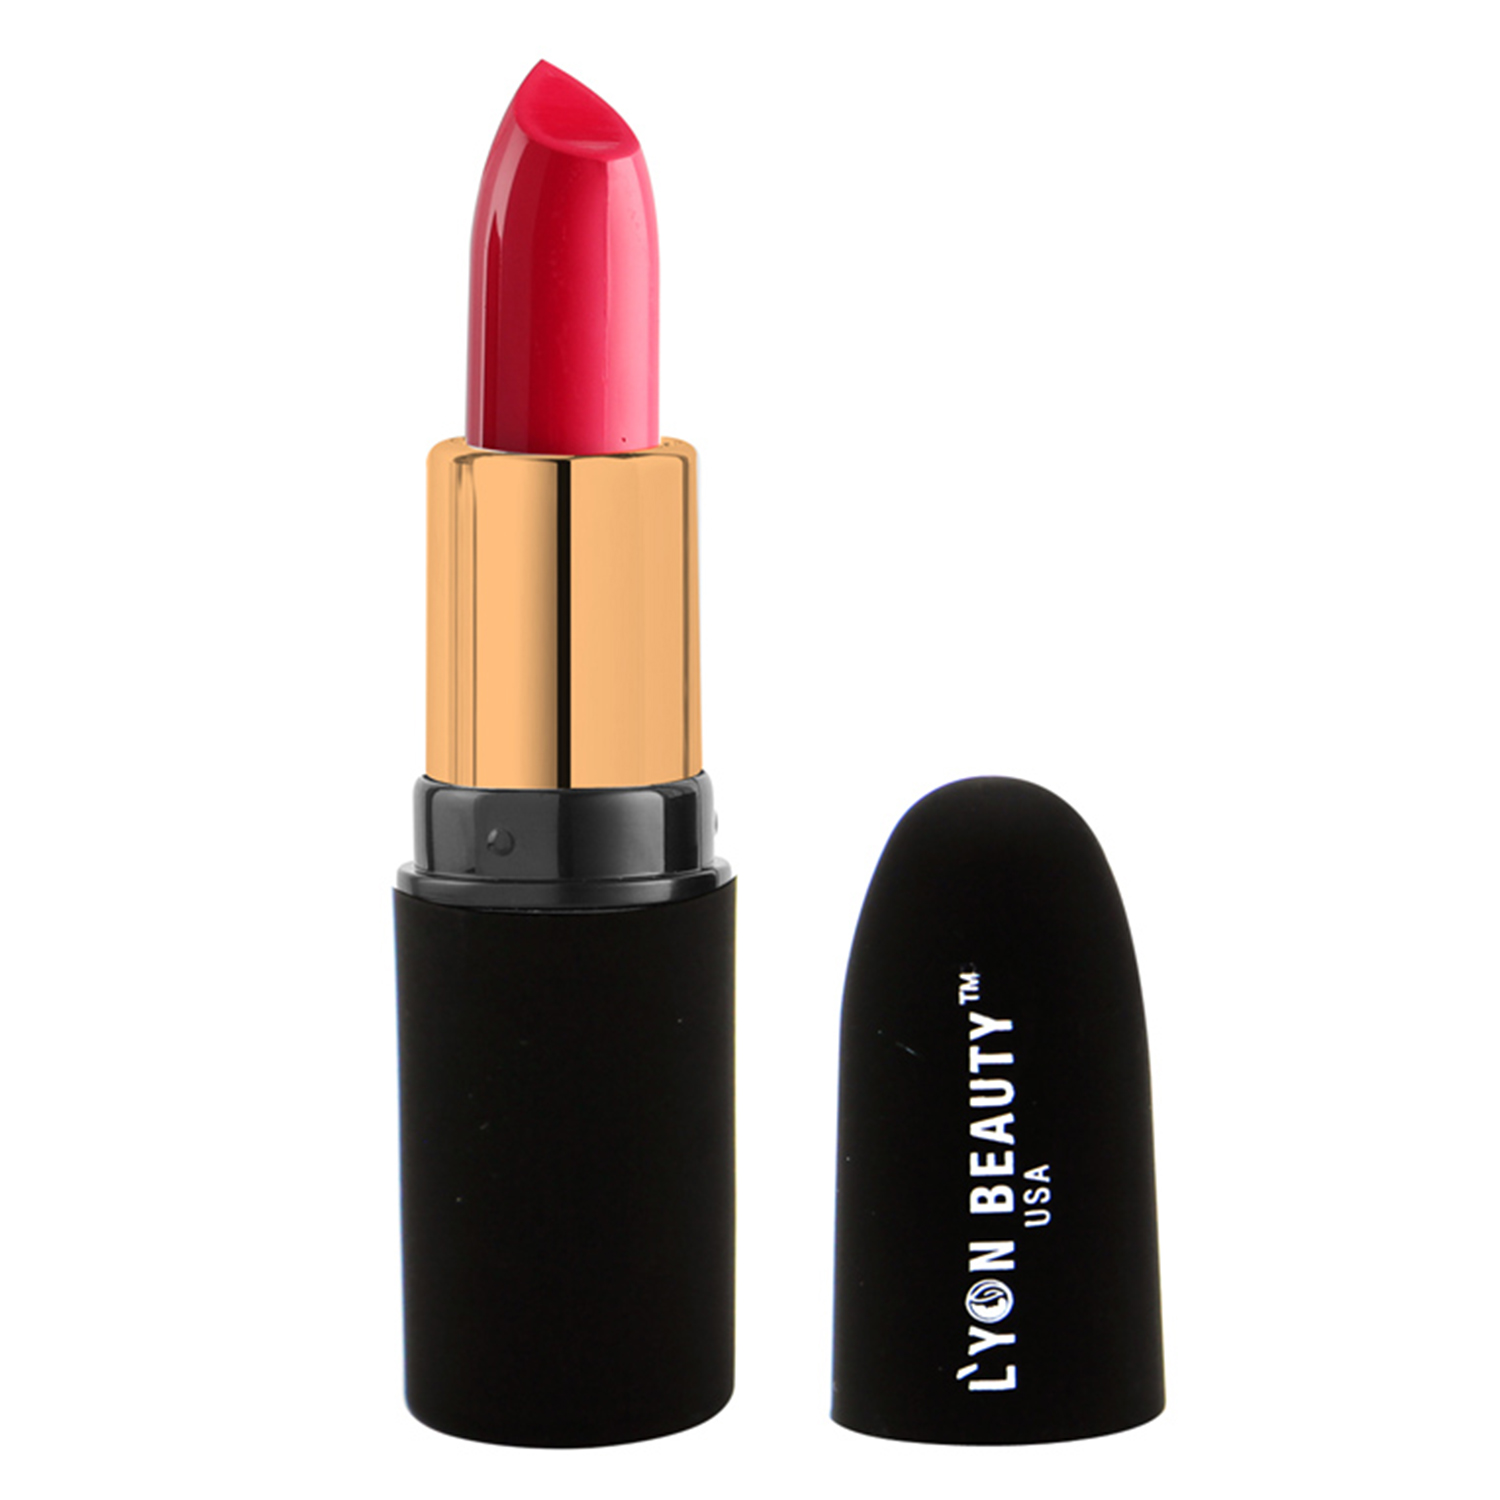 Lyon Beauty USA Pure Powder Matte Lipstick, 3.5gm-206 Coral Red